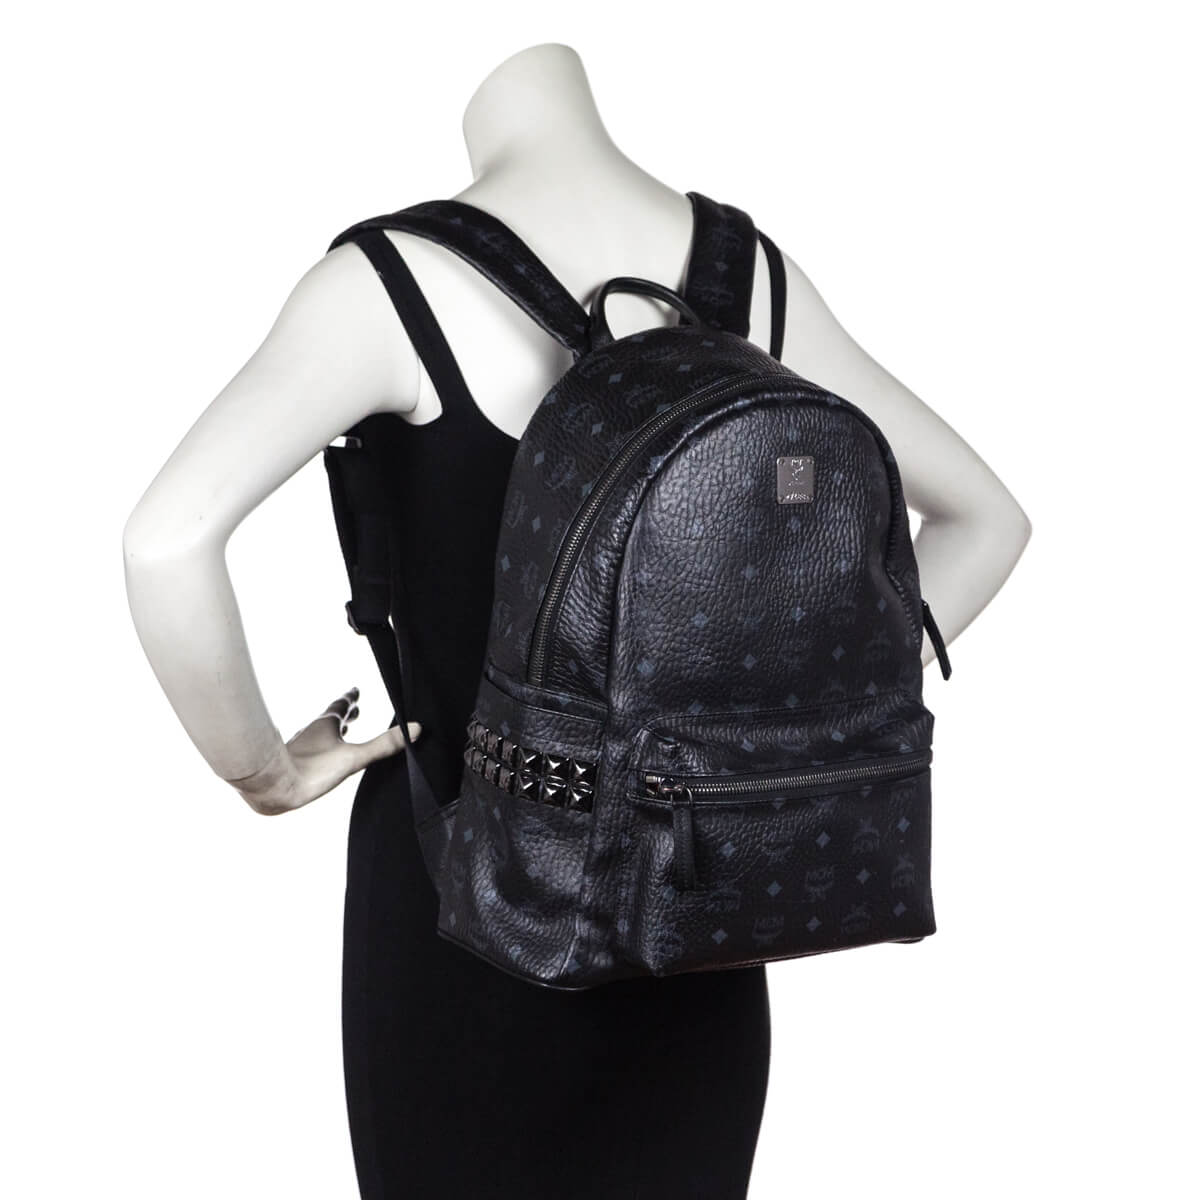 Authentic MCM Stark Front Studs Backpack in Visetos Black / MEDIUM